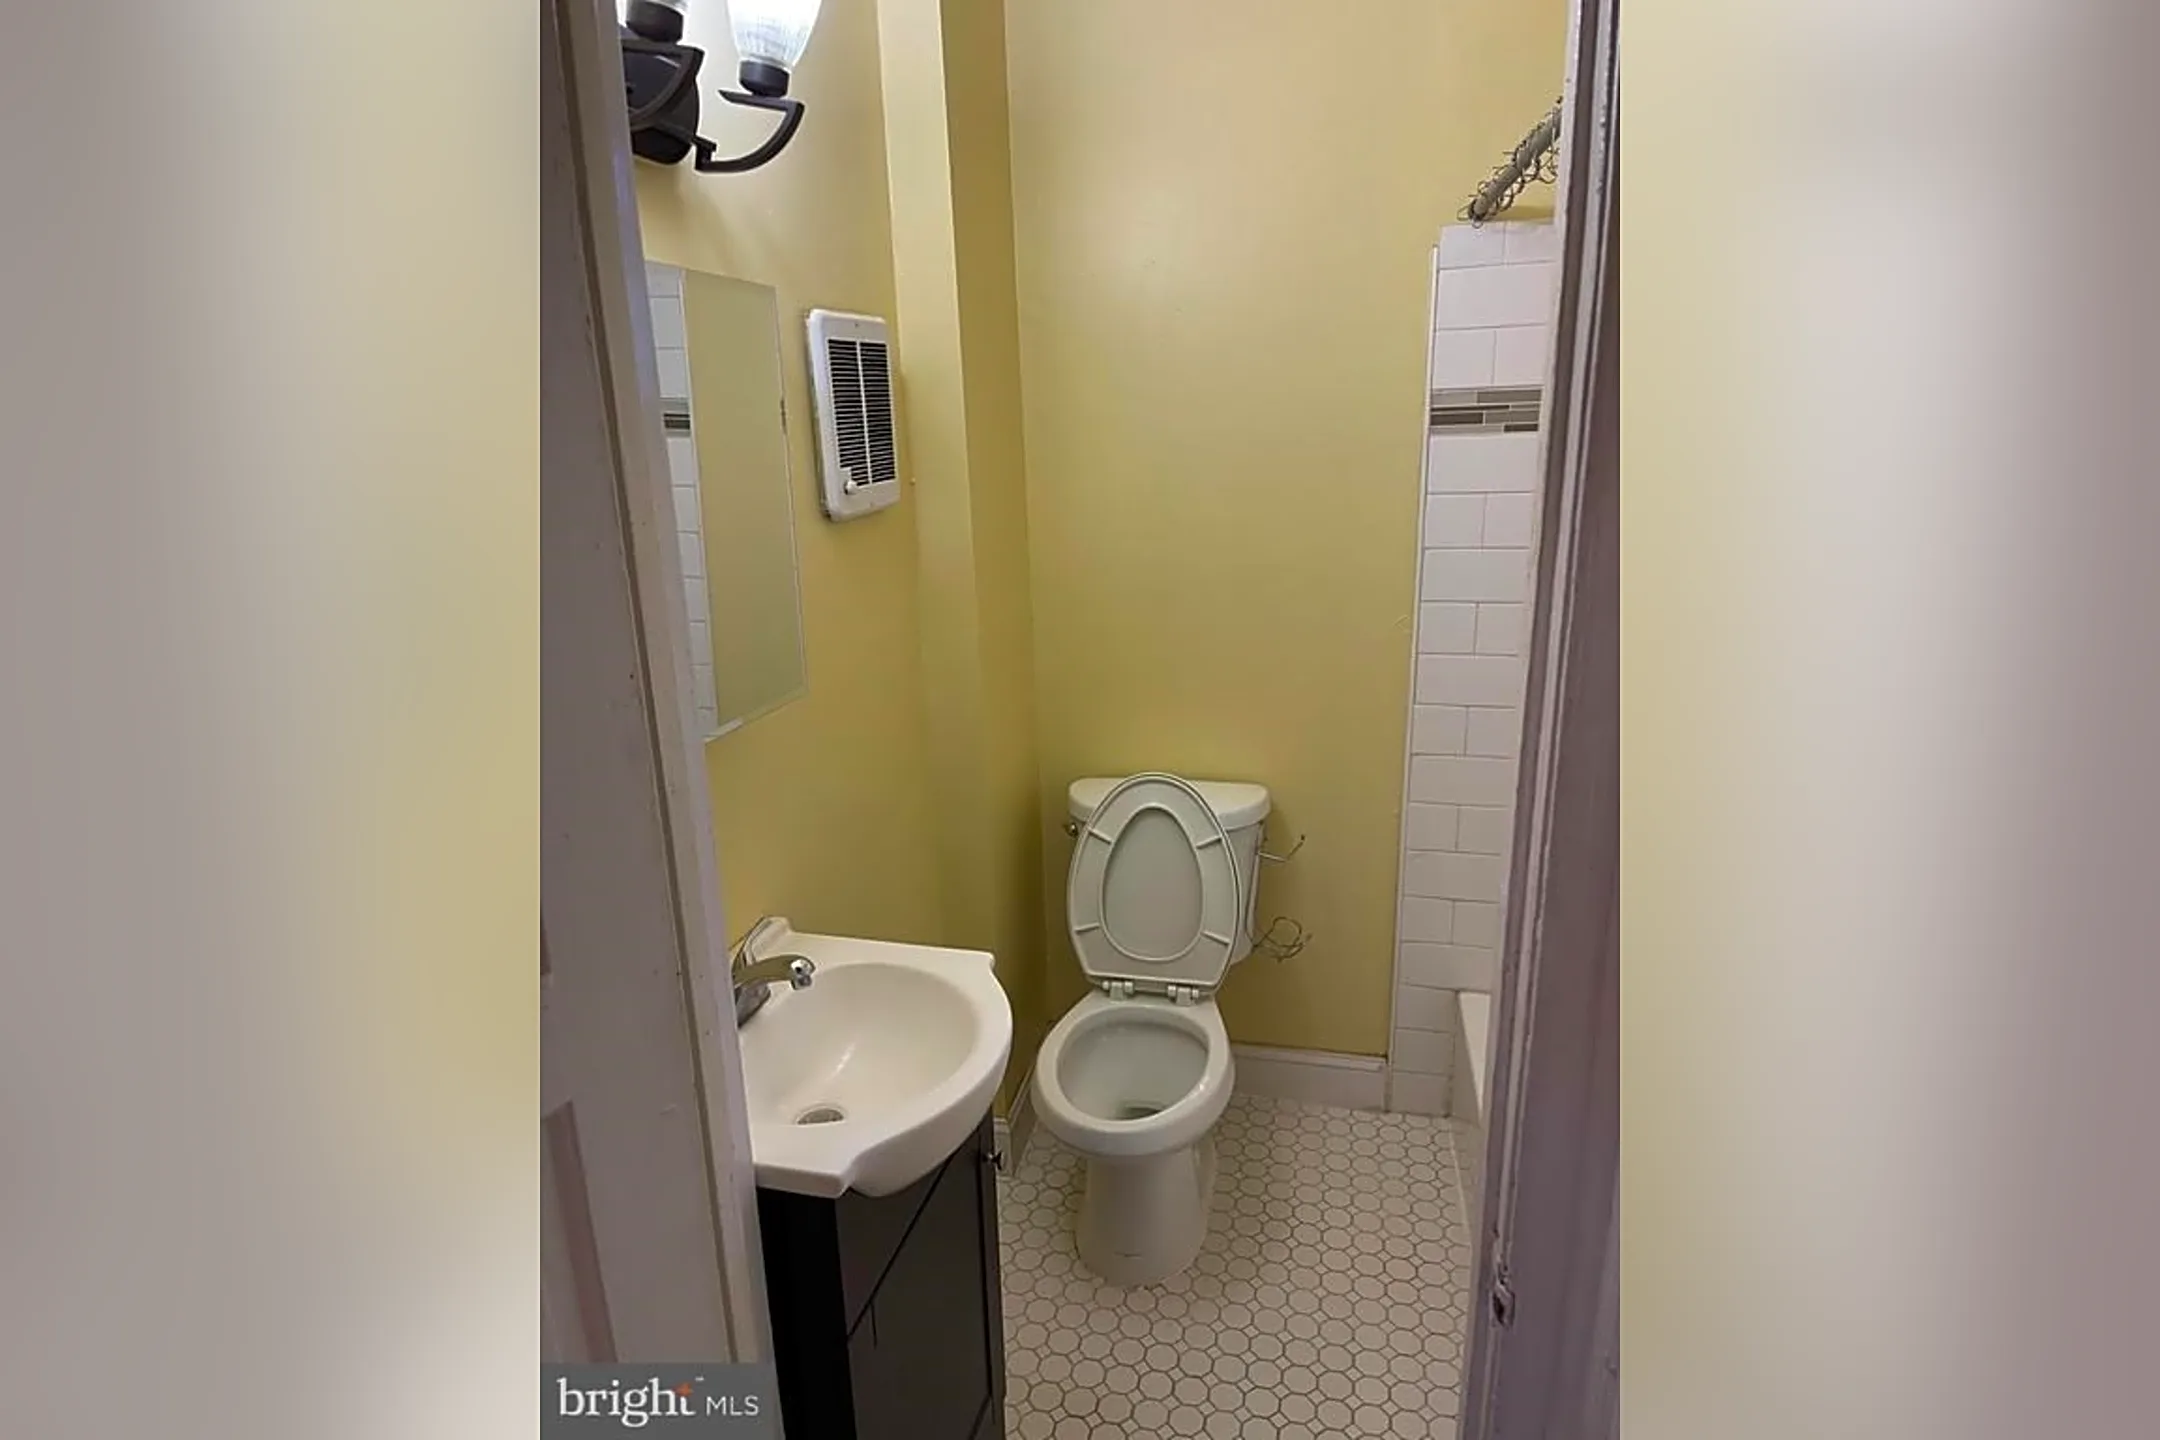 Bathroom - 5700 Chestnut St #2B - Philadelphia, PA